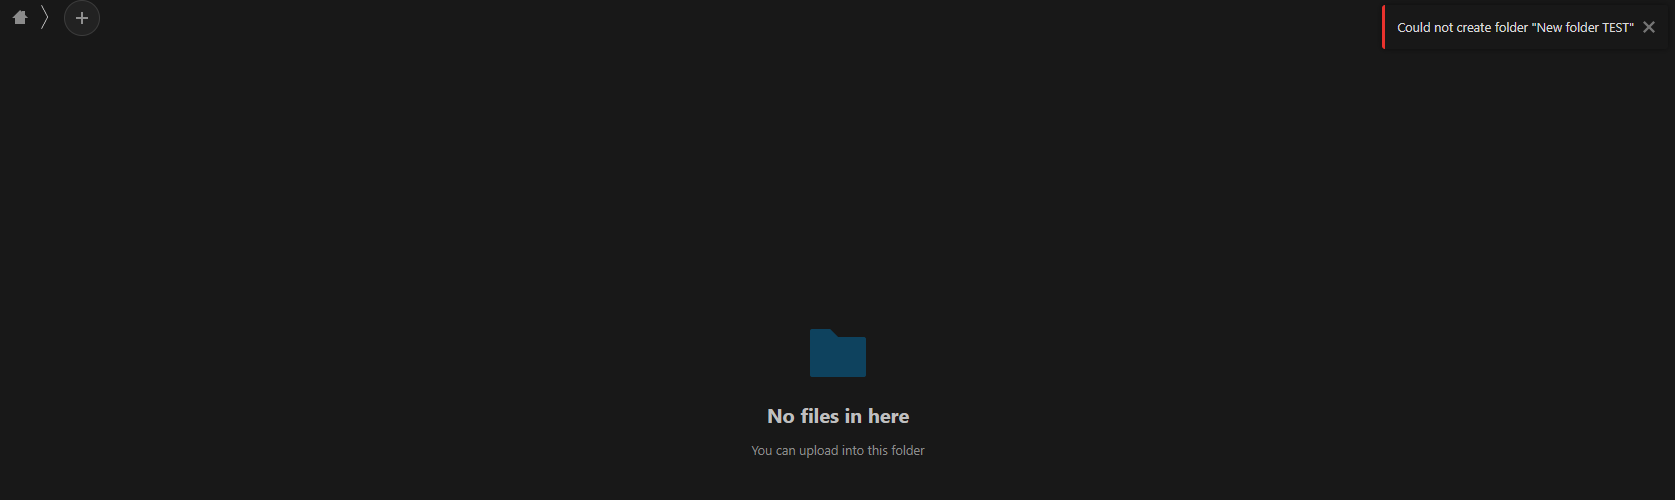 nextcloud cannot create folder 2